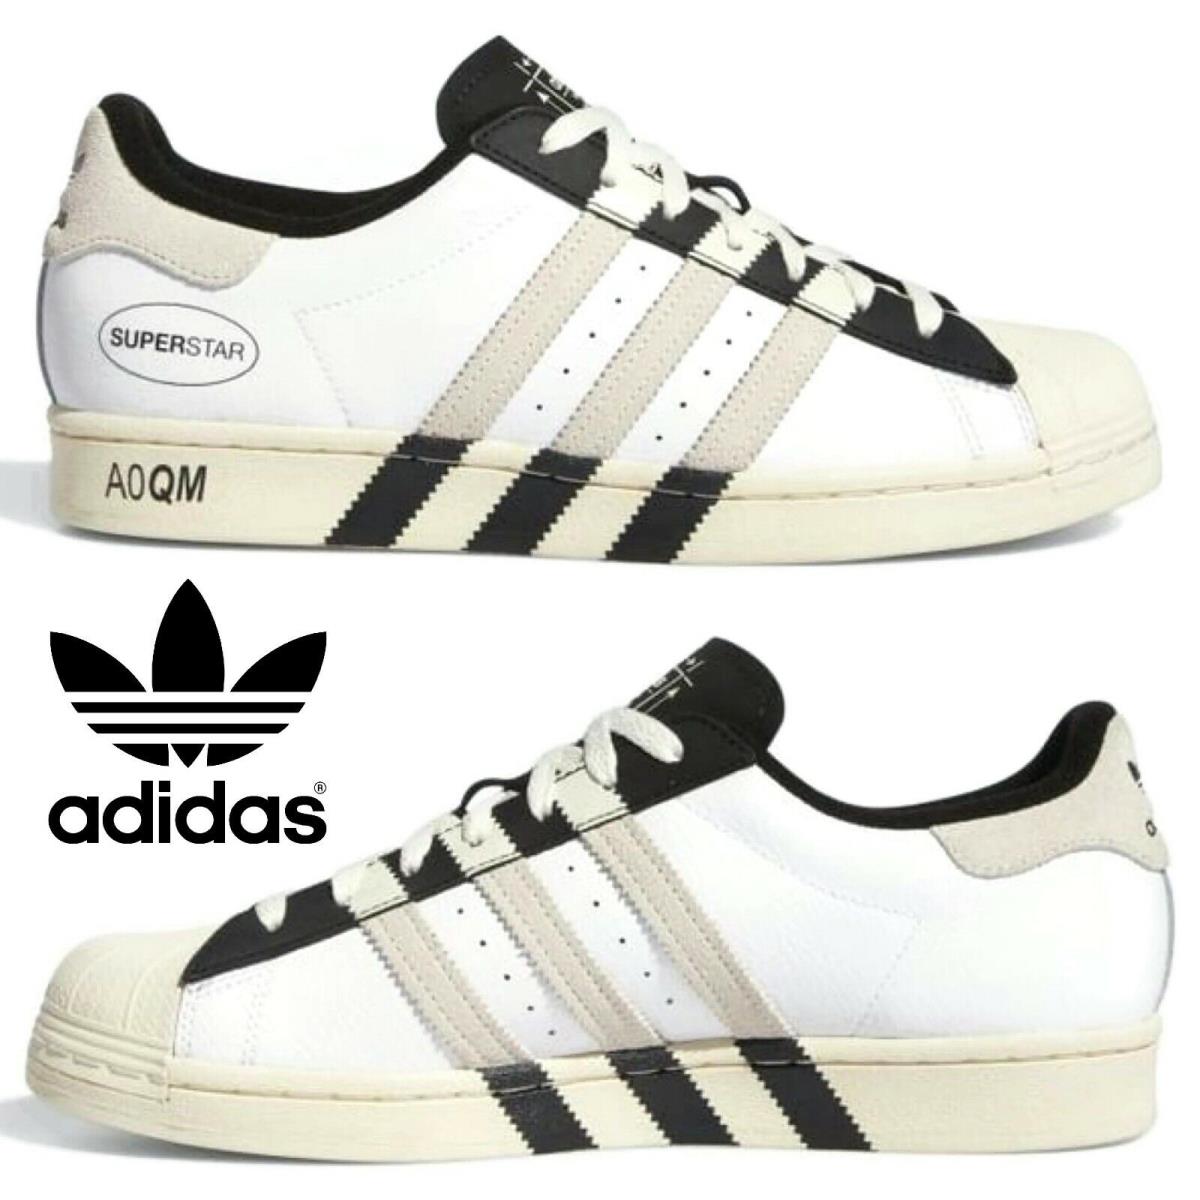 Adidas Originals Superstar Men`s Sneakers Comfort Sport Casual Shoes White Black - White , Cloud White / Core Black / Chalk White Manufacturer